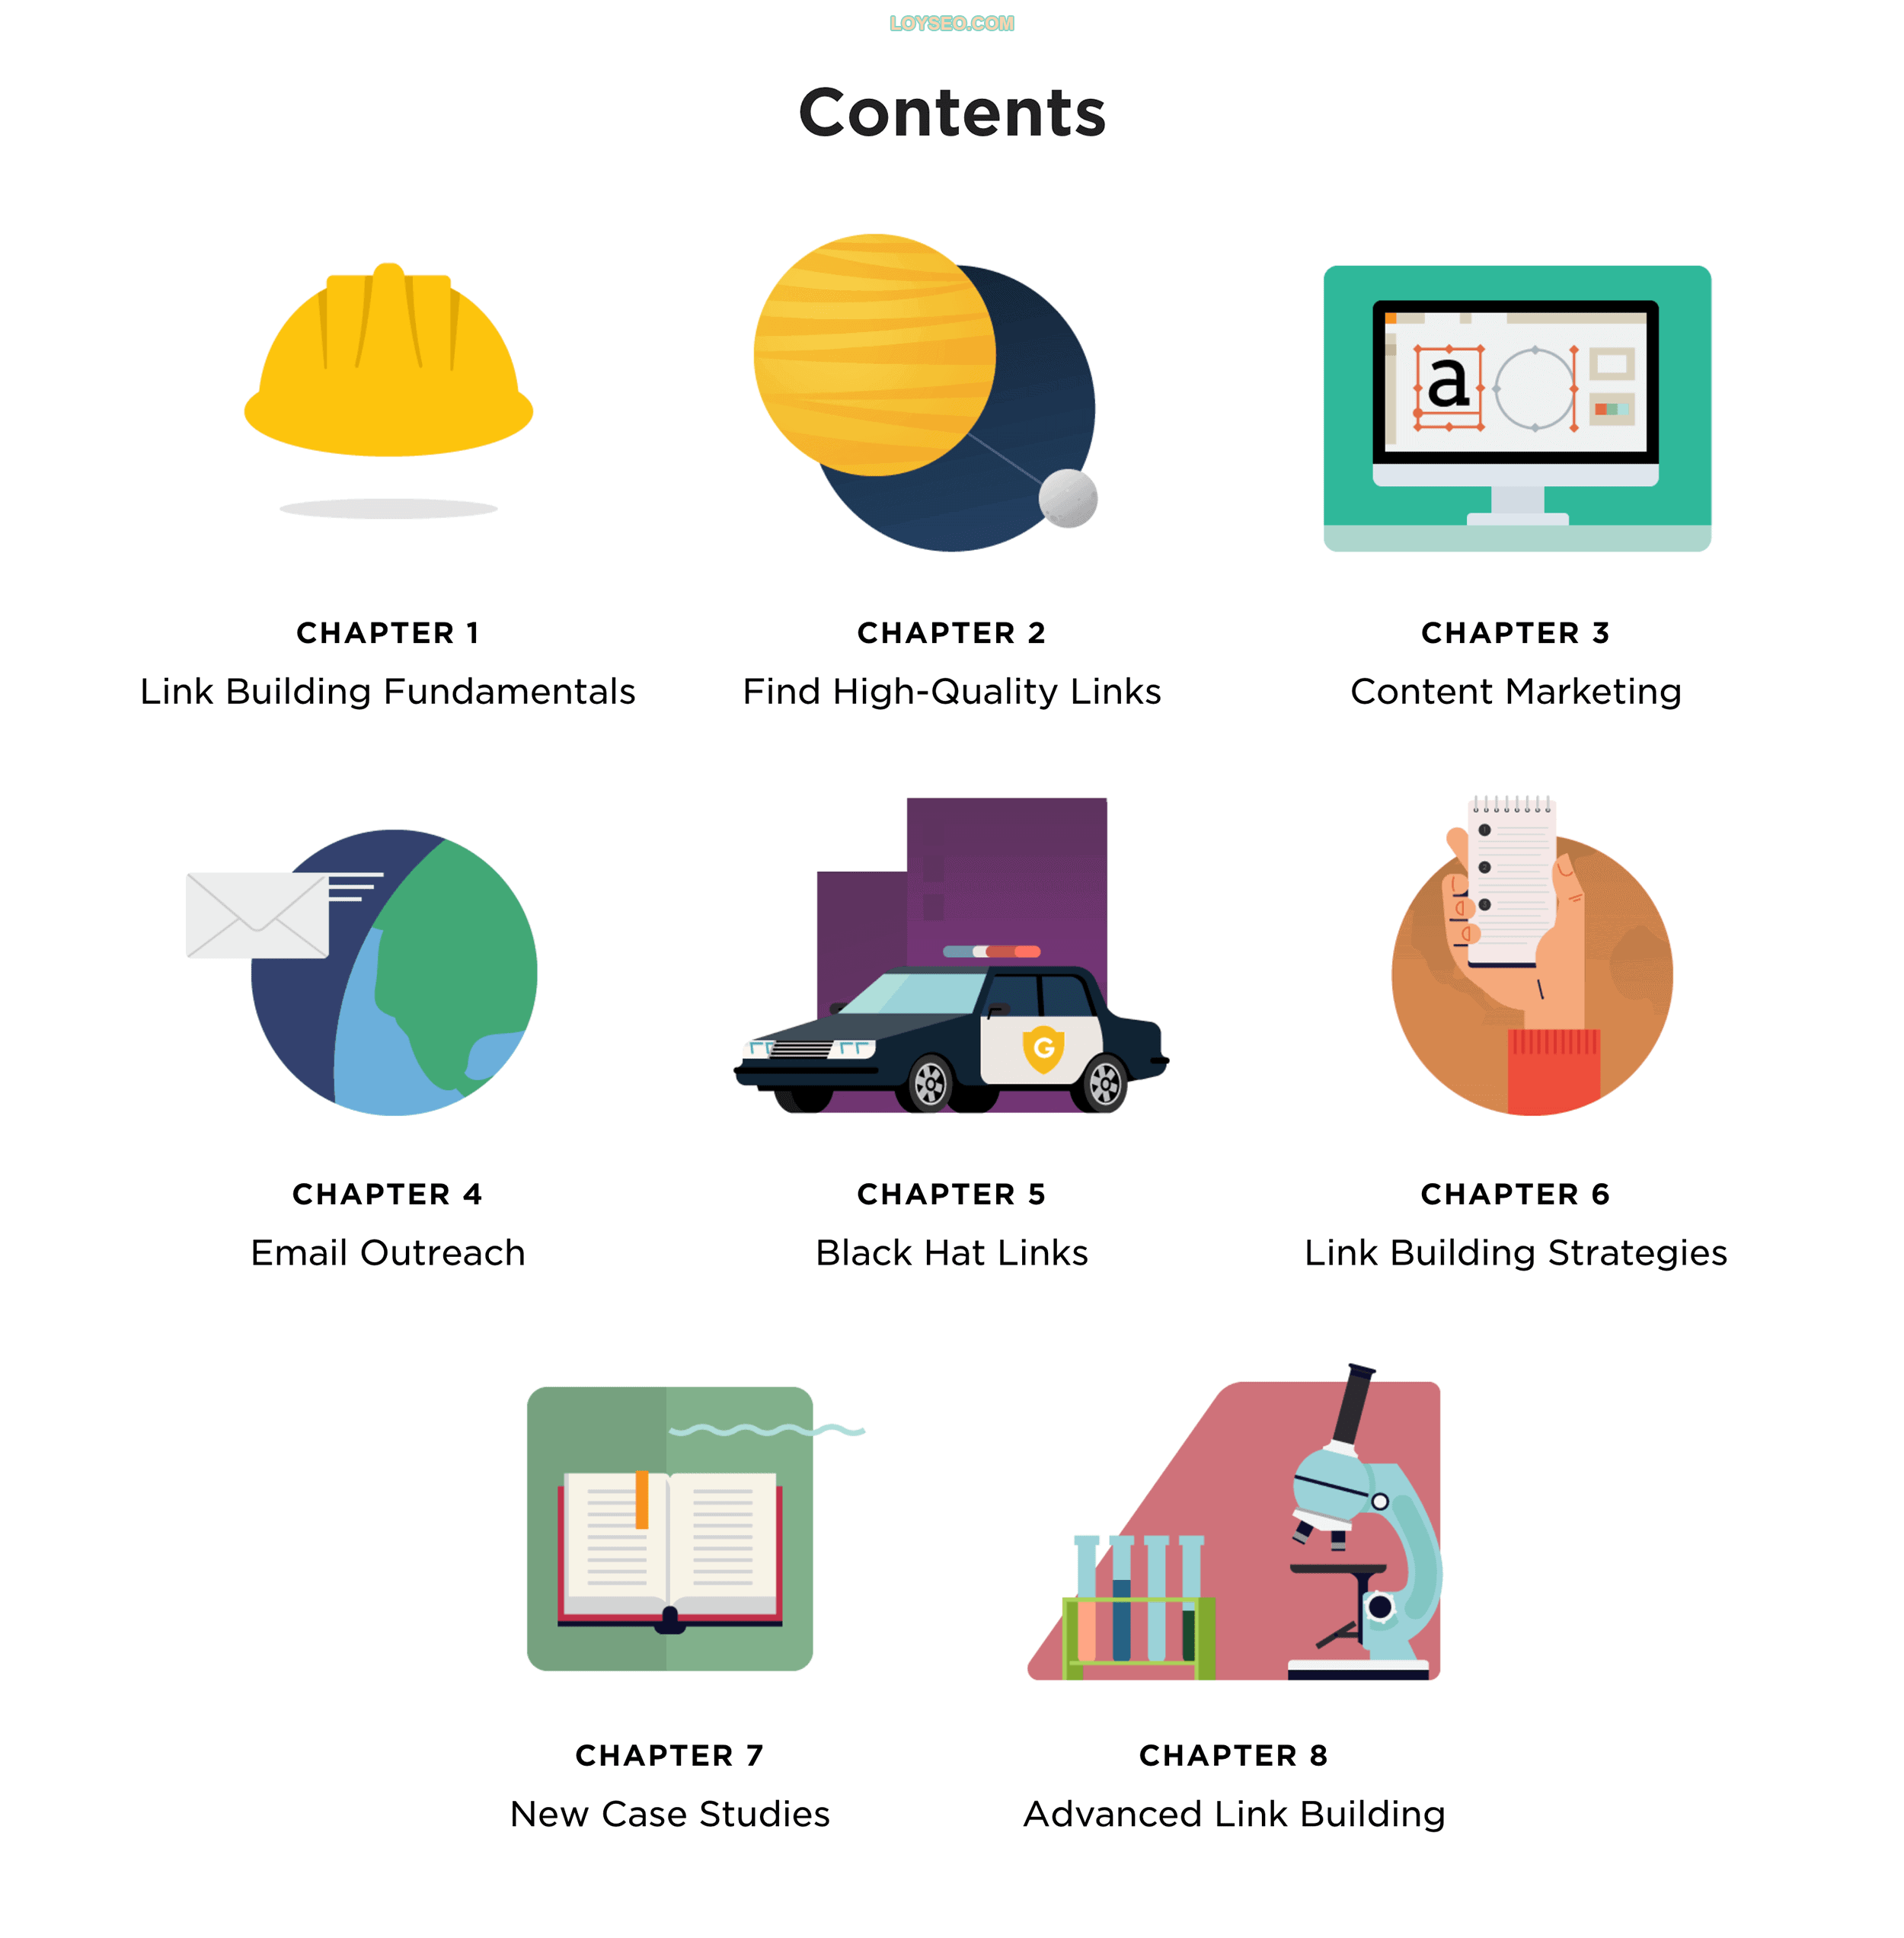 Link Building – Contents